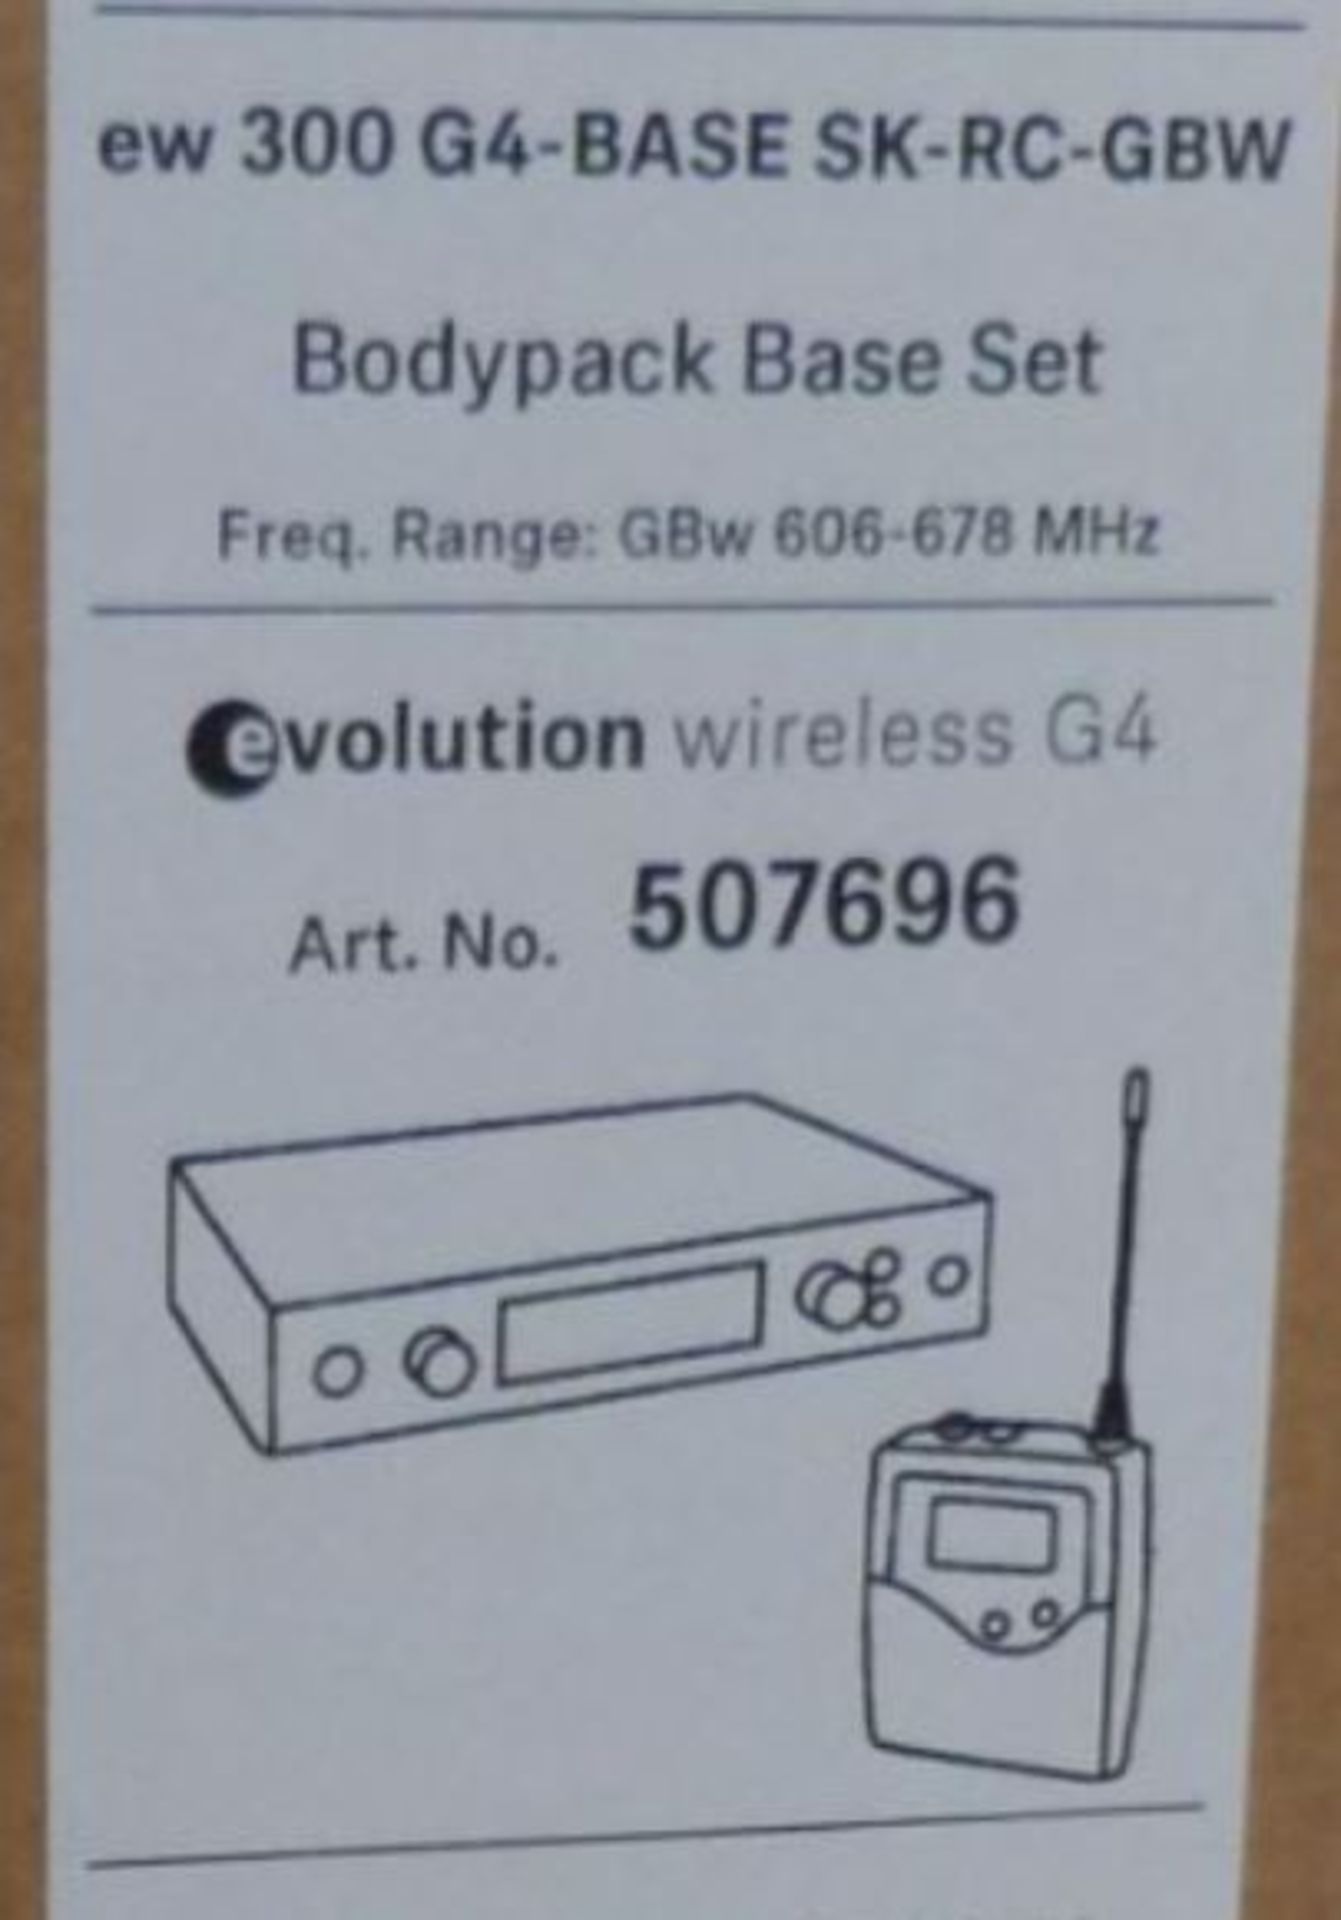 Sennheiser EW 300 G4-BASE SK-RC-GBW Bodypack Base Set 507696. In Cardboard. Serial No: 8348709861